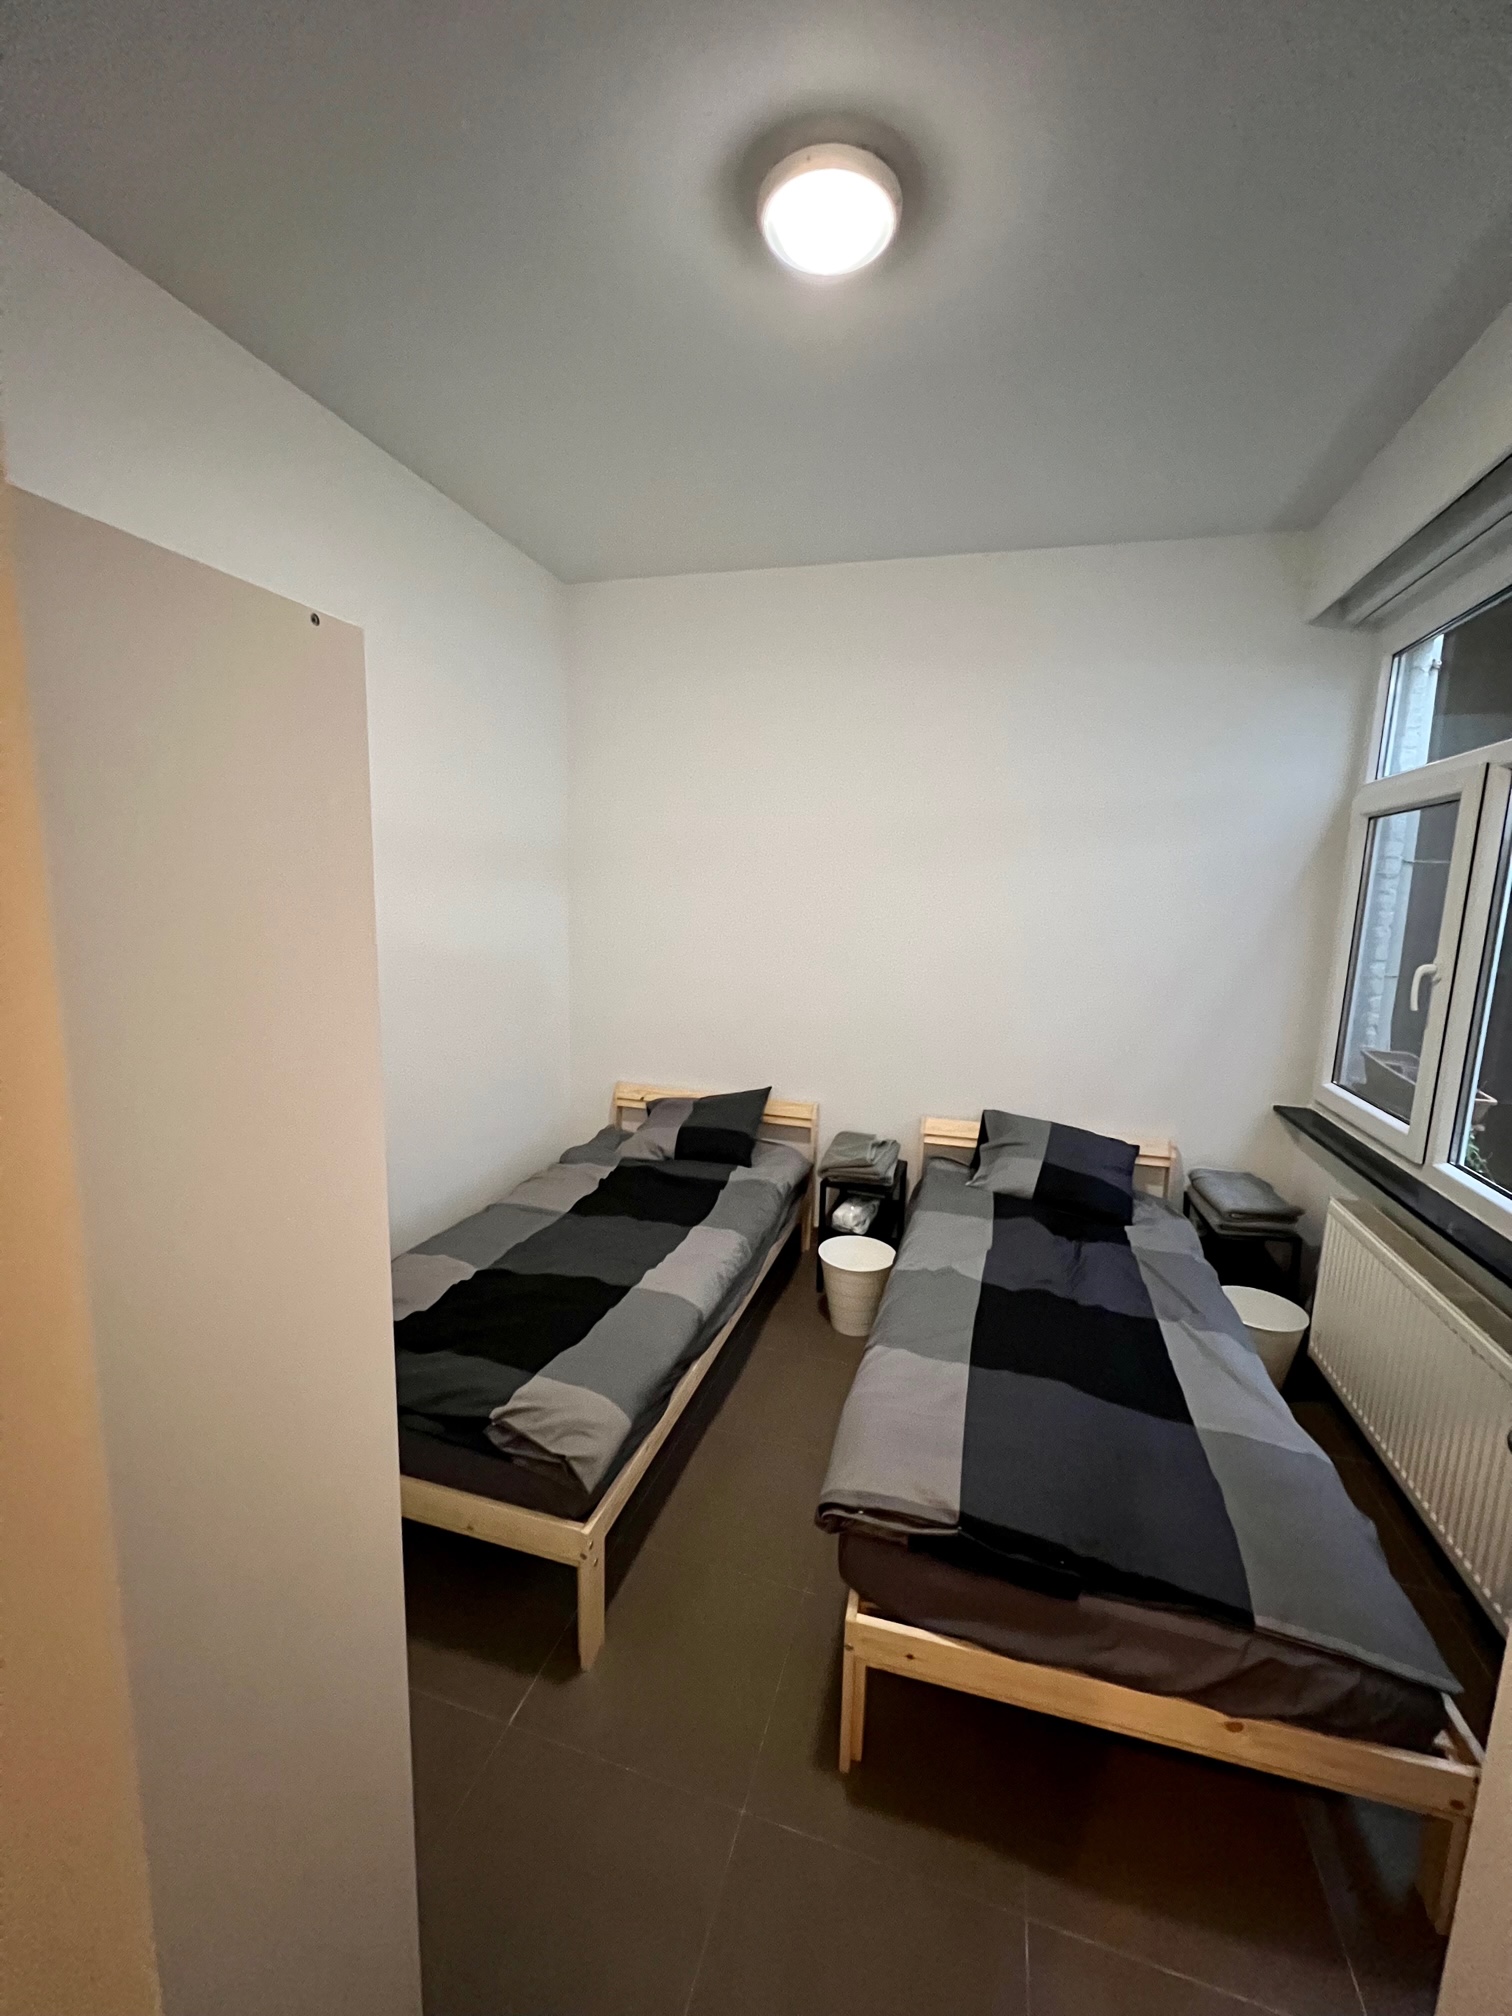 Herentals - Workers accommodation near Antwerp